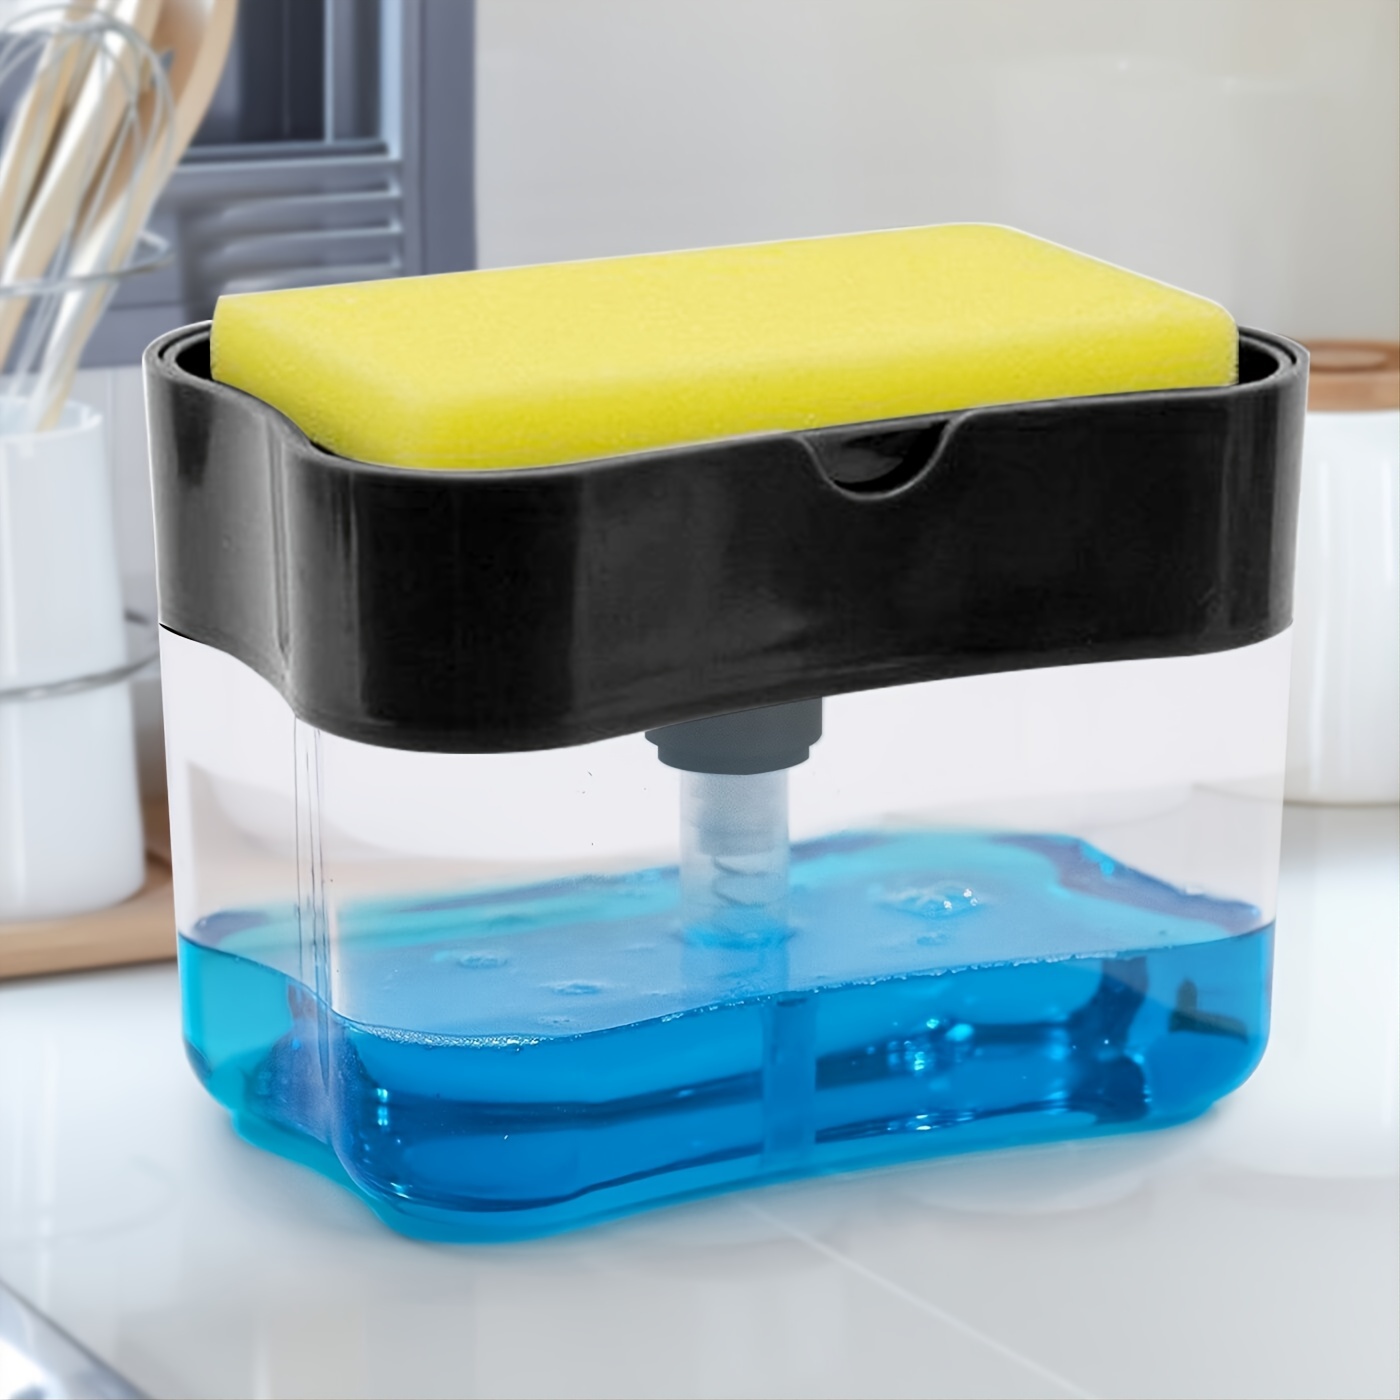 Sponge caddy and Dishwasher soap dispenser - GoodsForYou